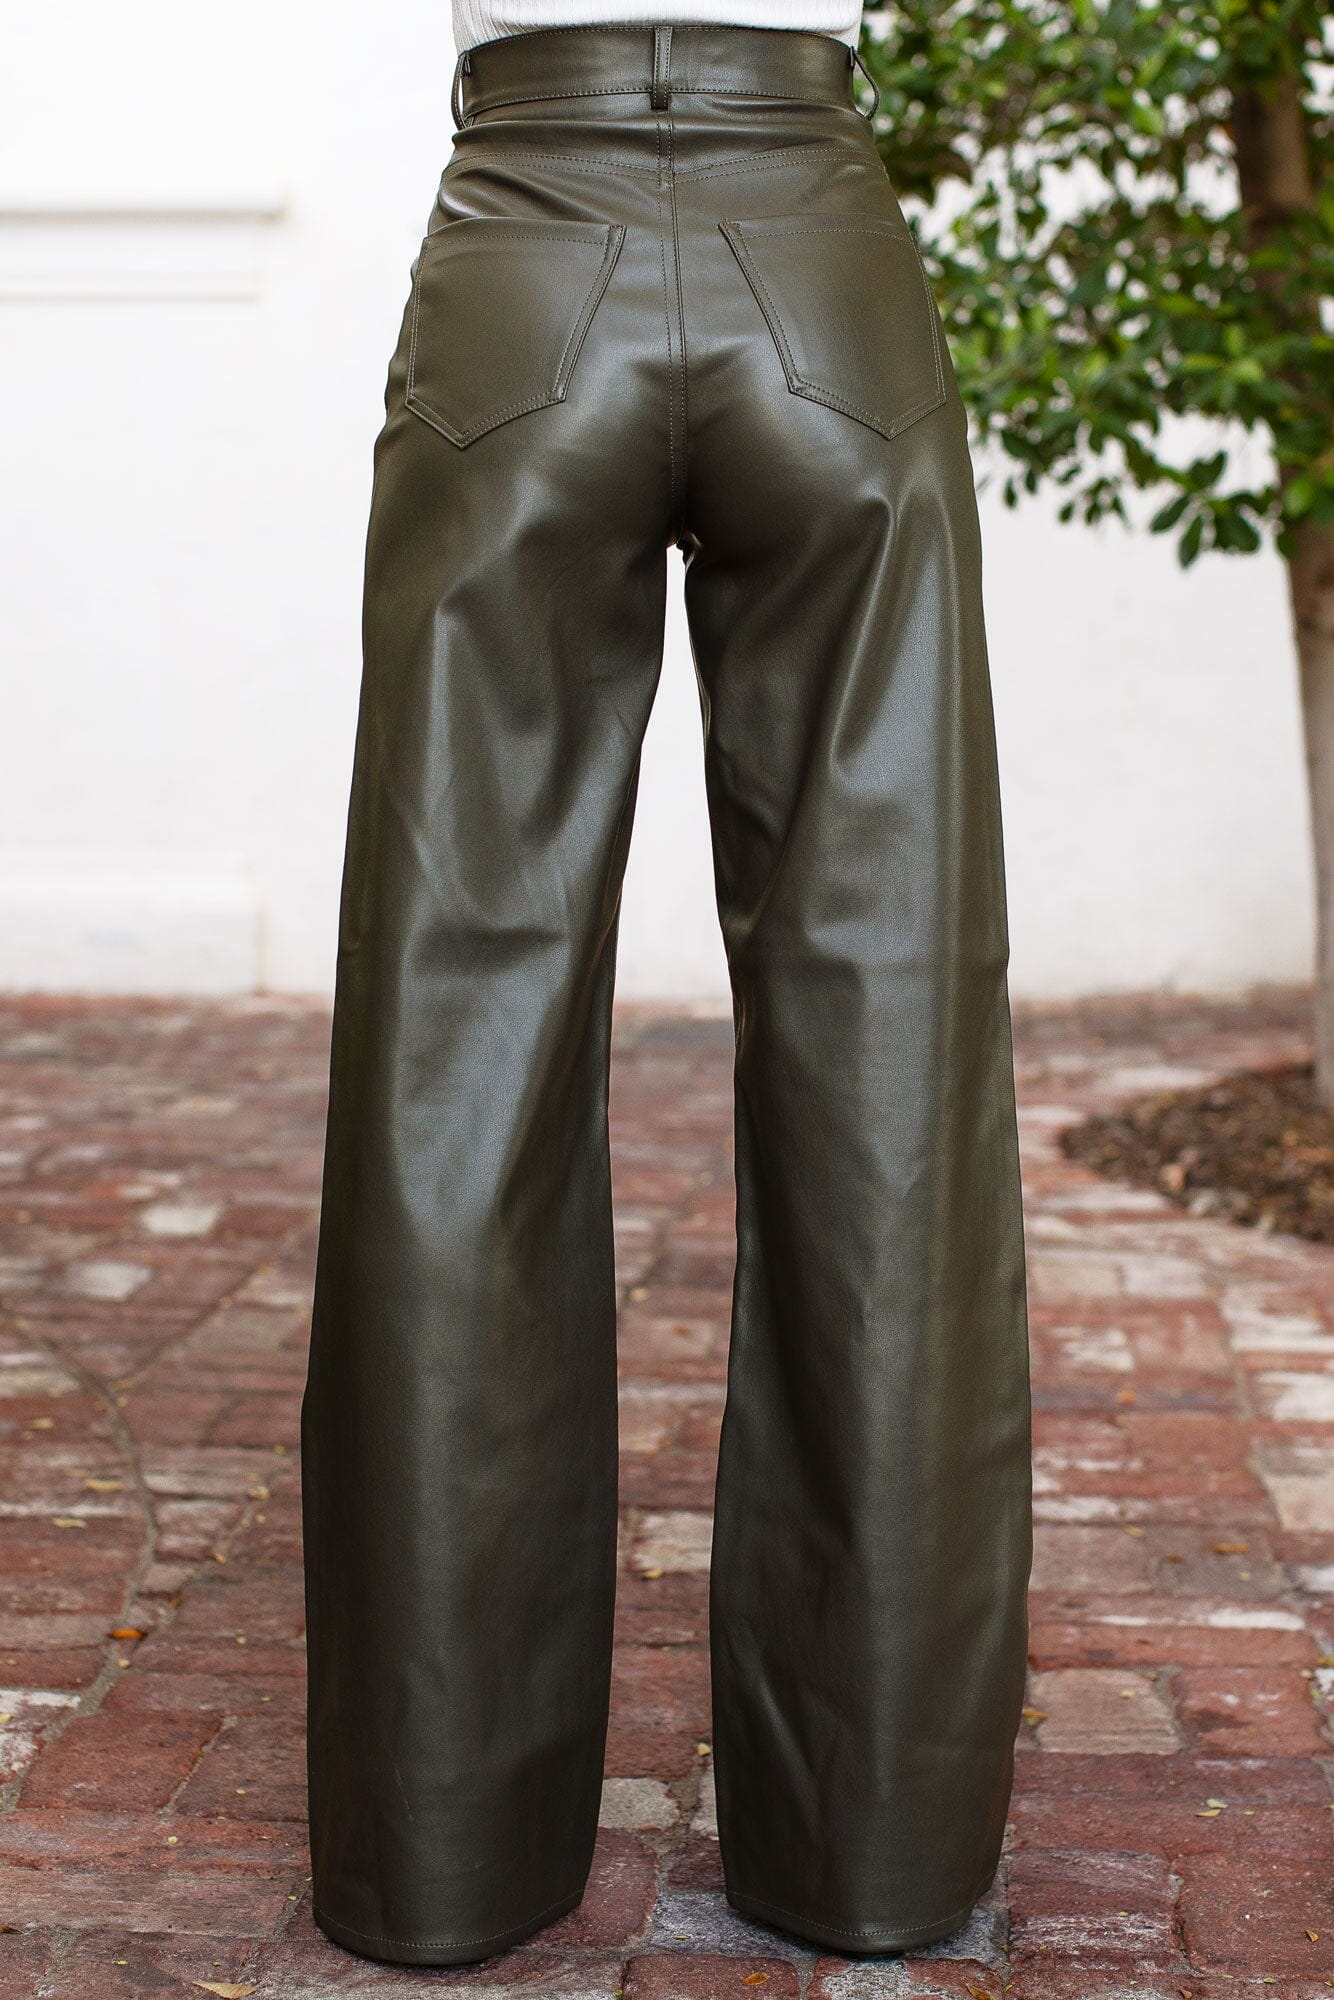 Olive Vegan Leather Flare Pants